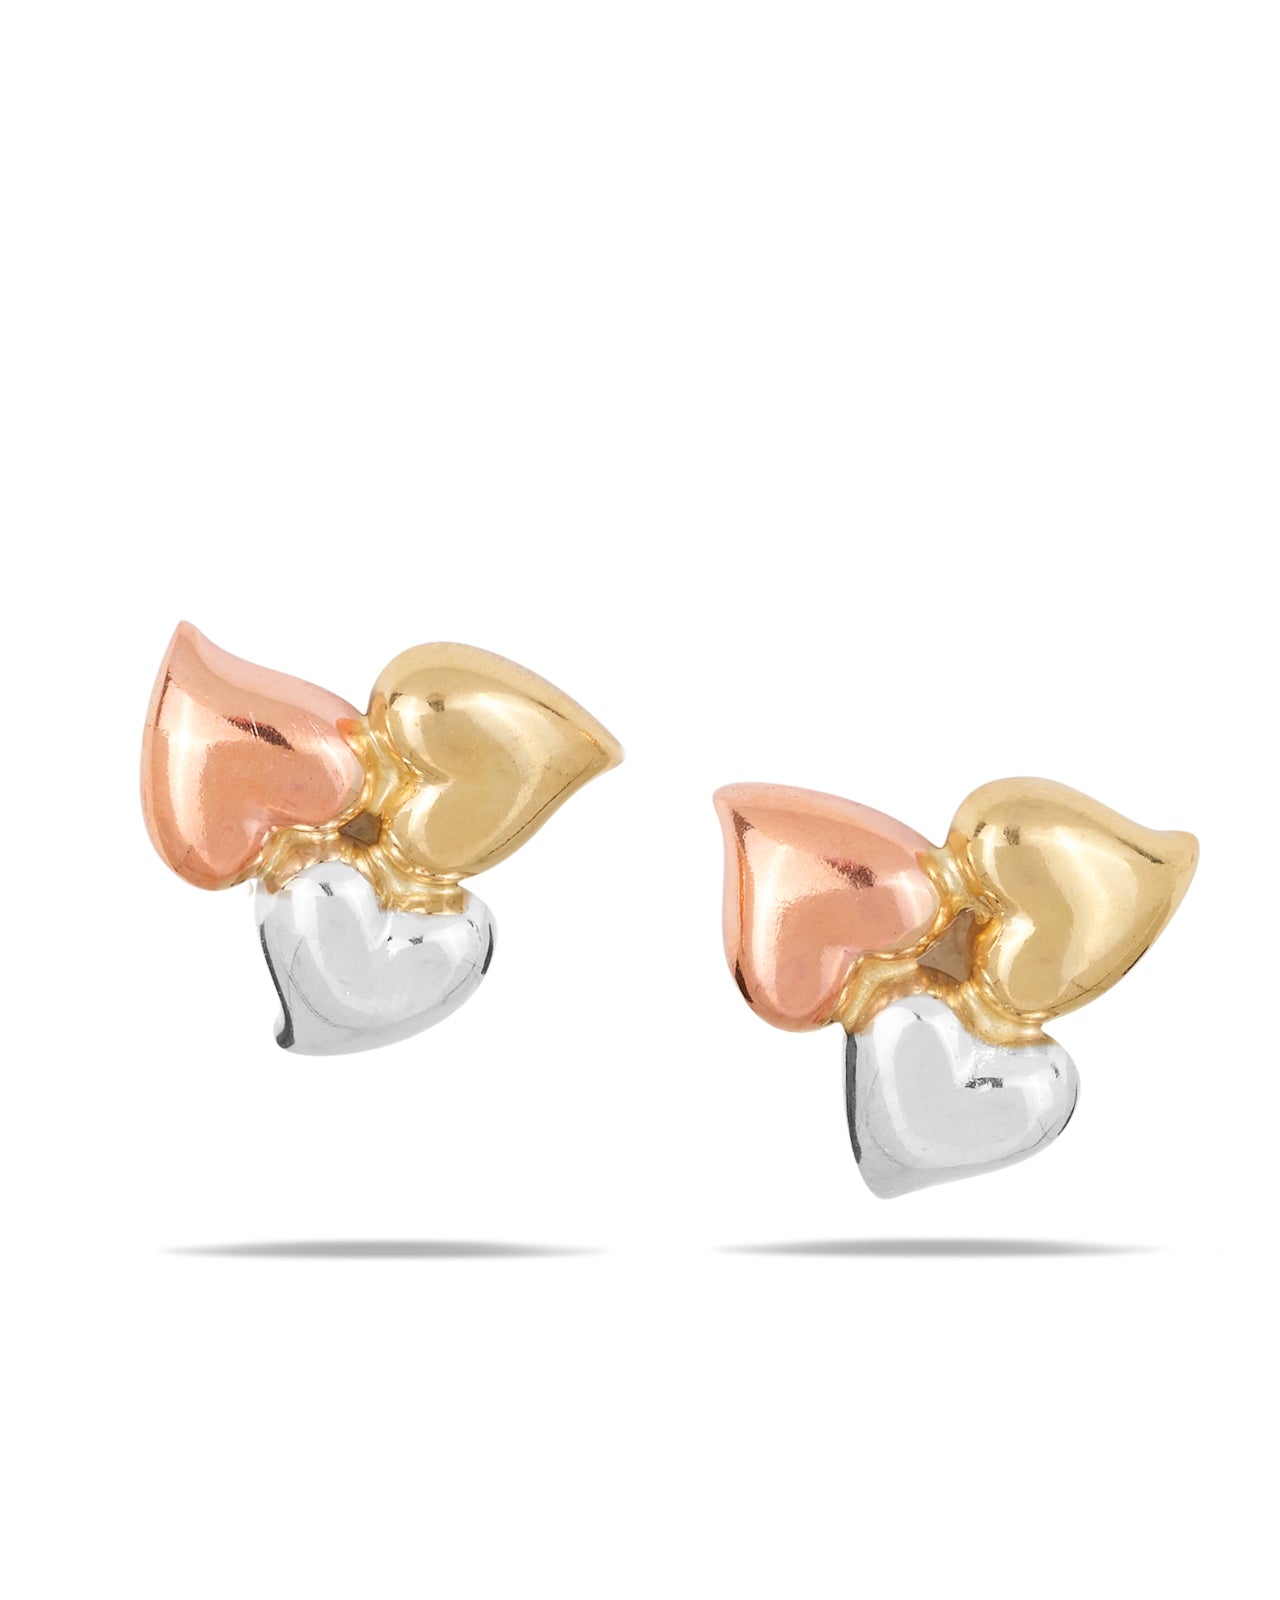 18ct tri-colour gold heart earrings